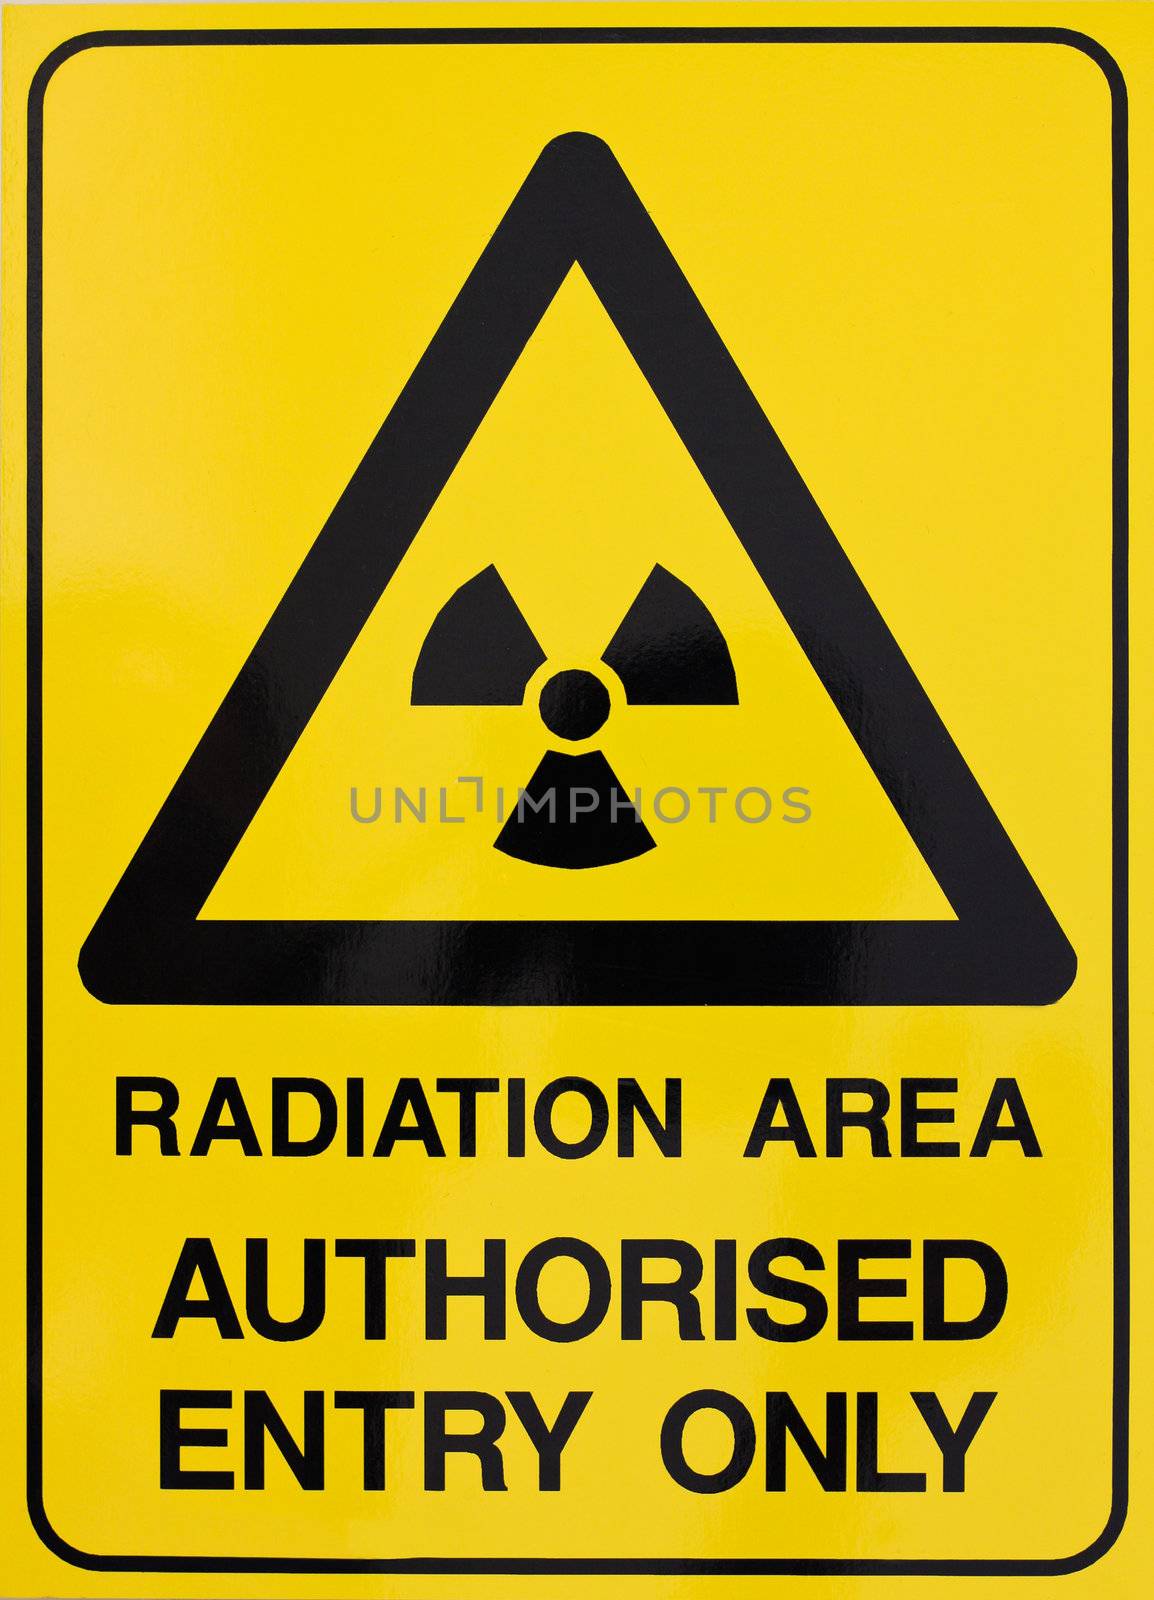 Nuclear radiation warning sign by Jaykayl